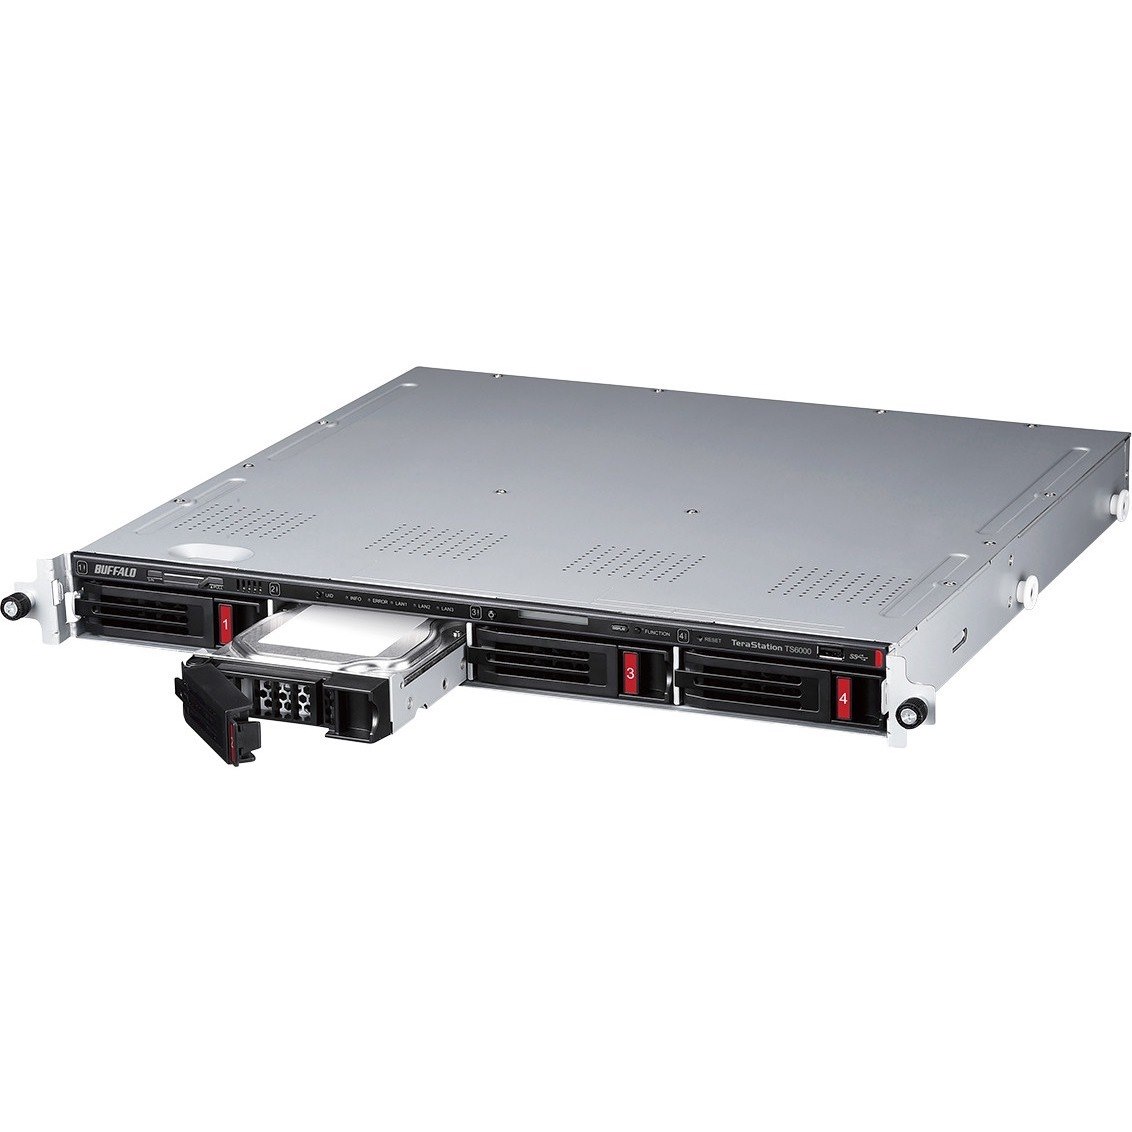 BUFFALO TeraStation 6400RN 16TB Rackmount NAS Hard Drives Included + Snapshot